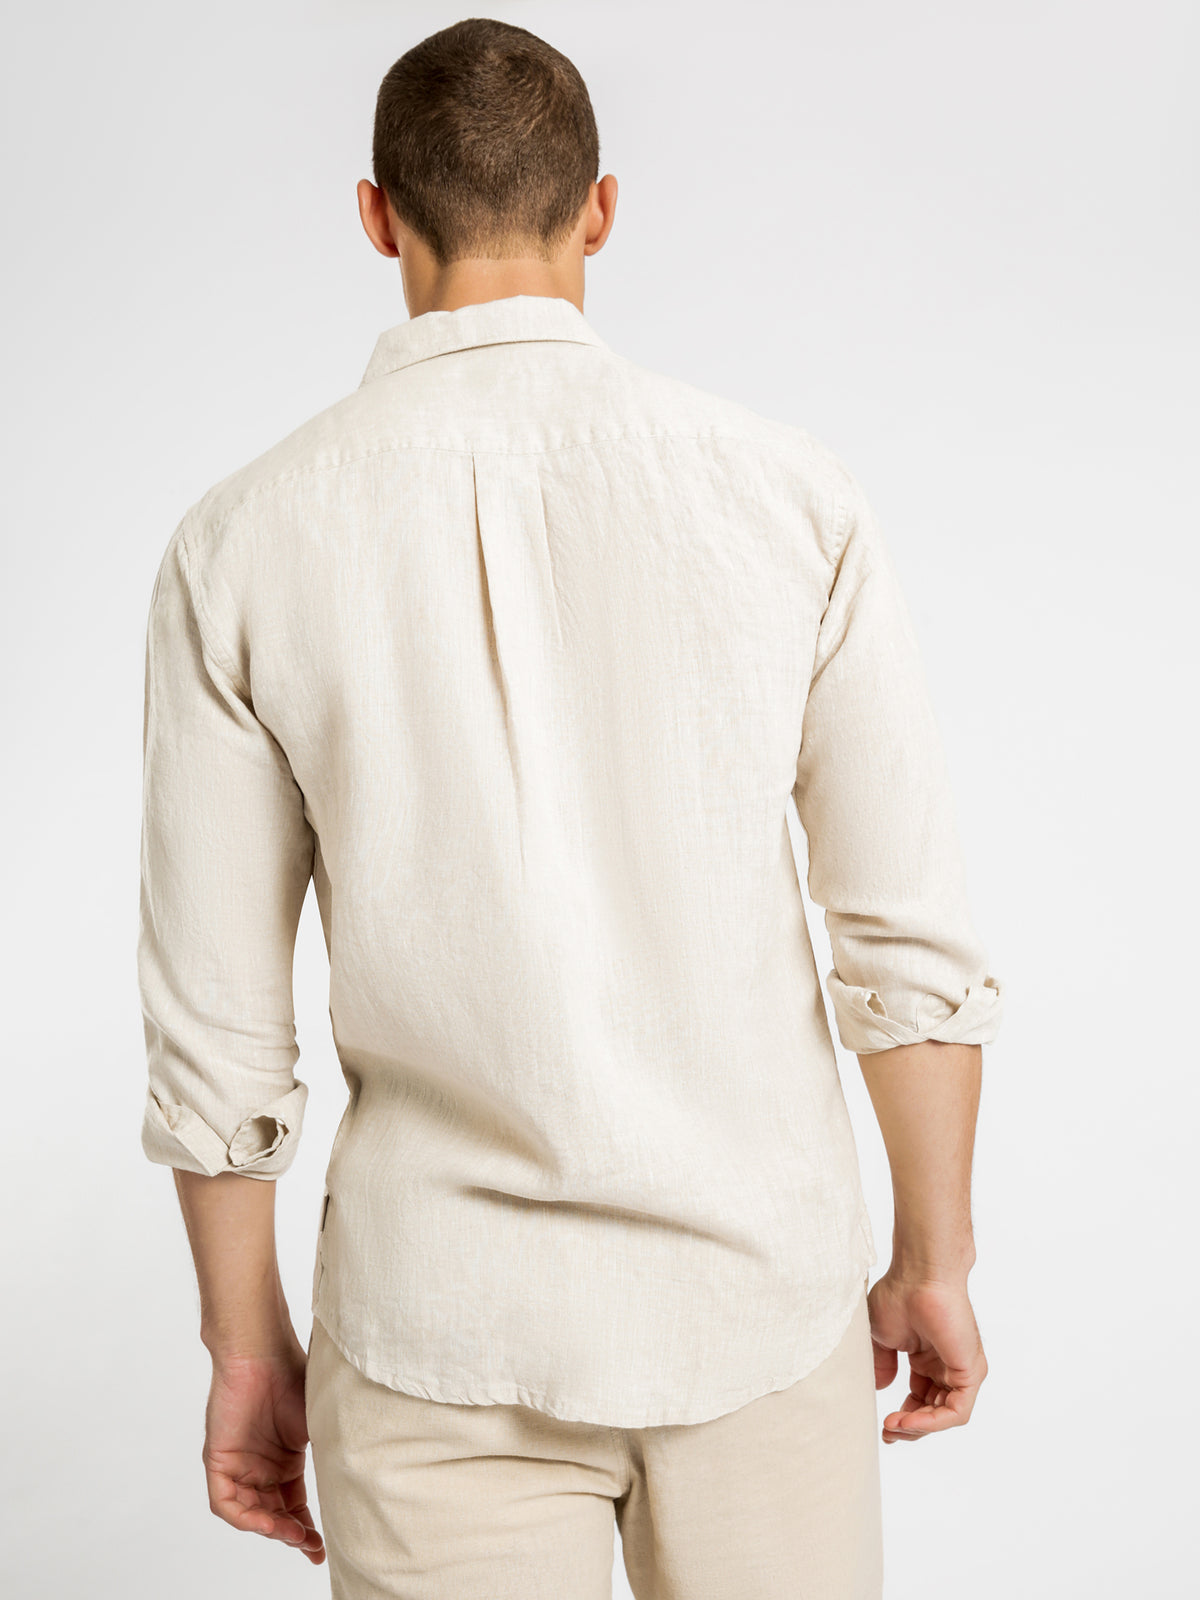 Nelson Long Sleeve Linen Shirt in Natural Marle